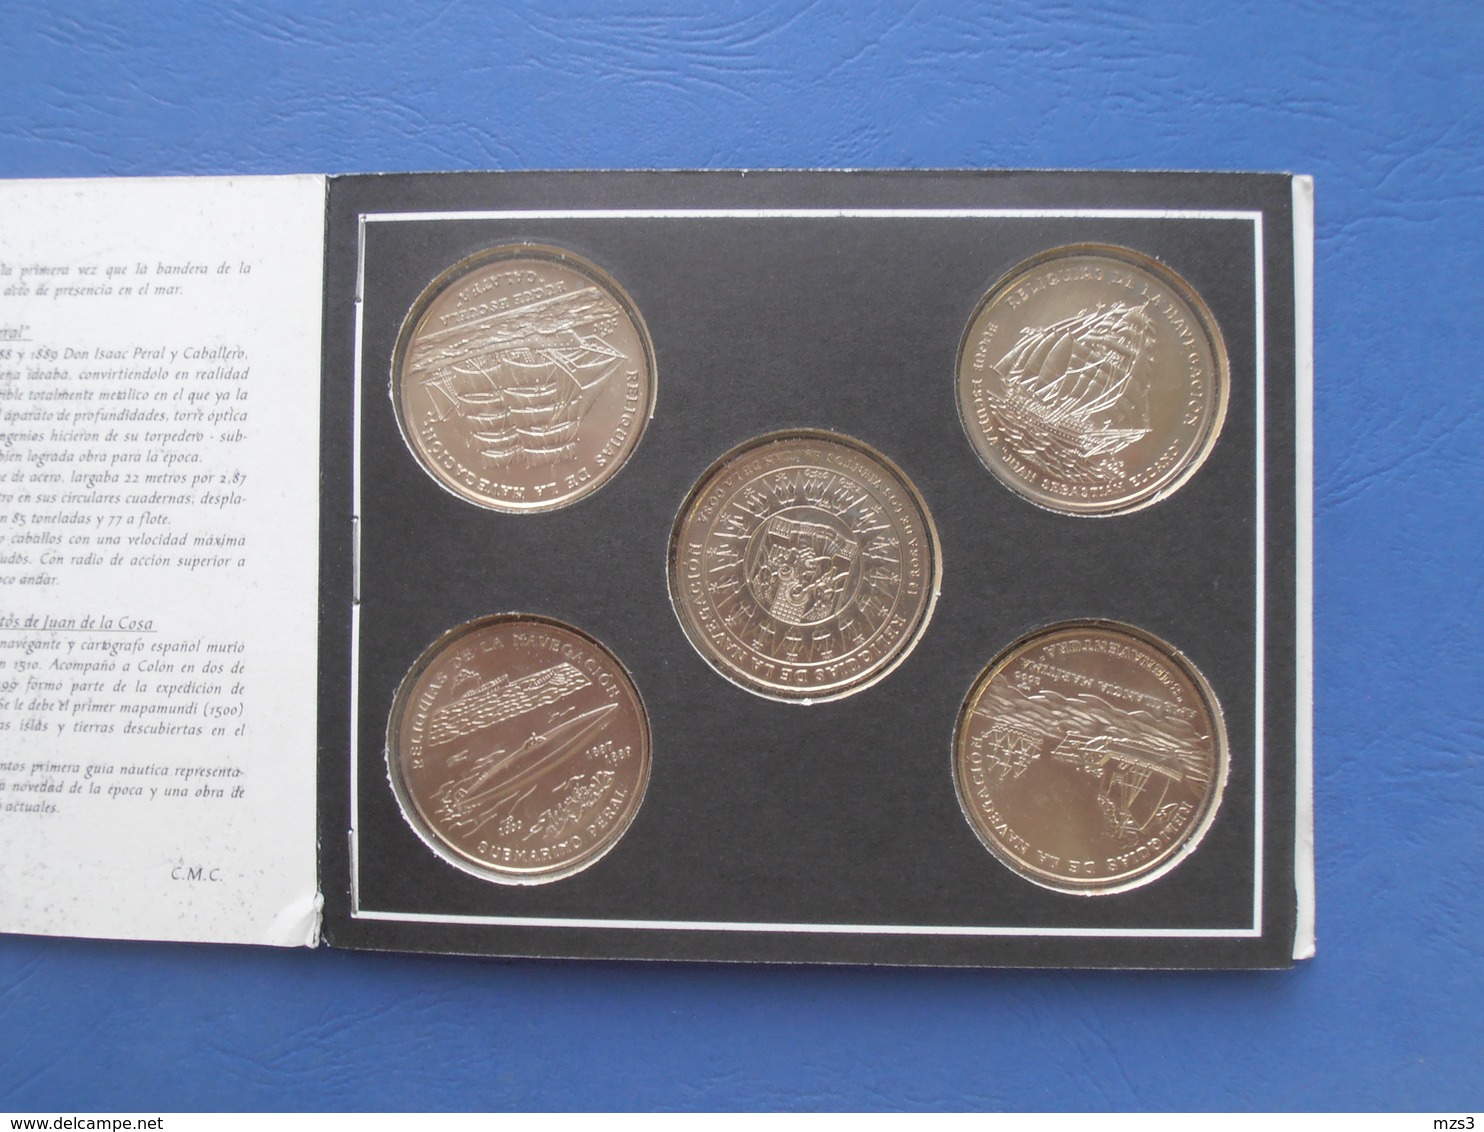 CUBA 5 Coins Of 1 PESO 2000 "RELIQUIAS DE LA NAVEGATION" BU - Cuba